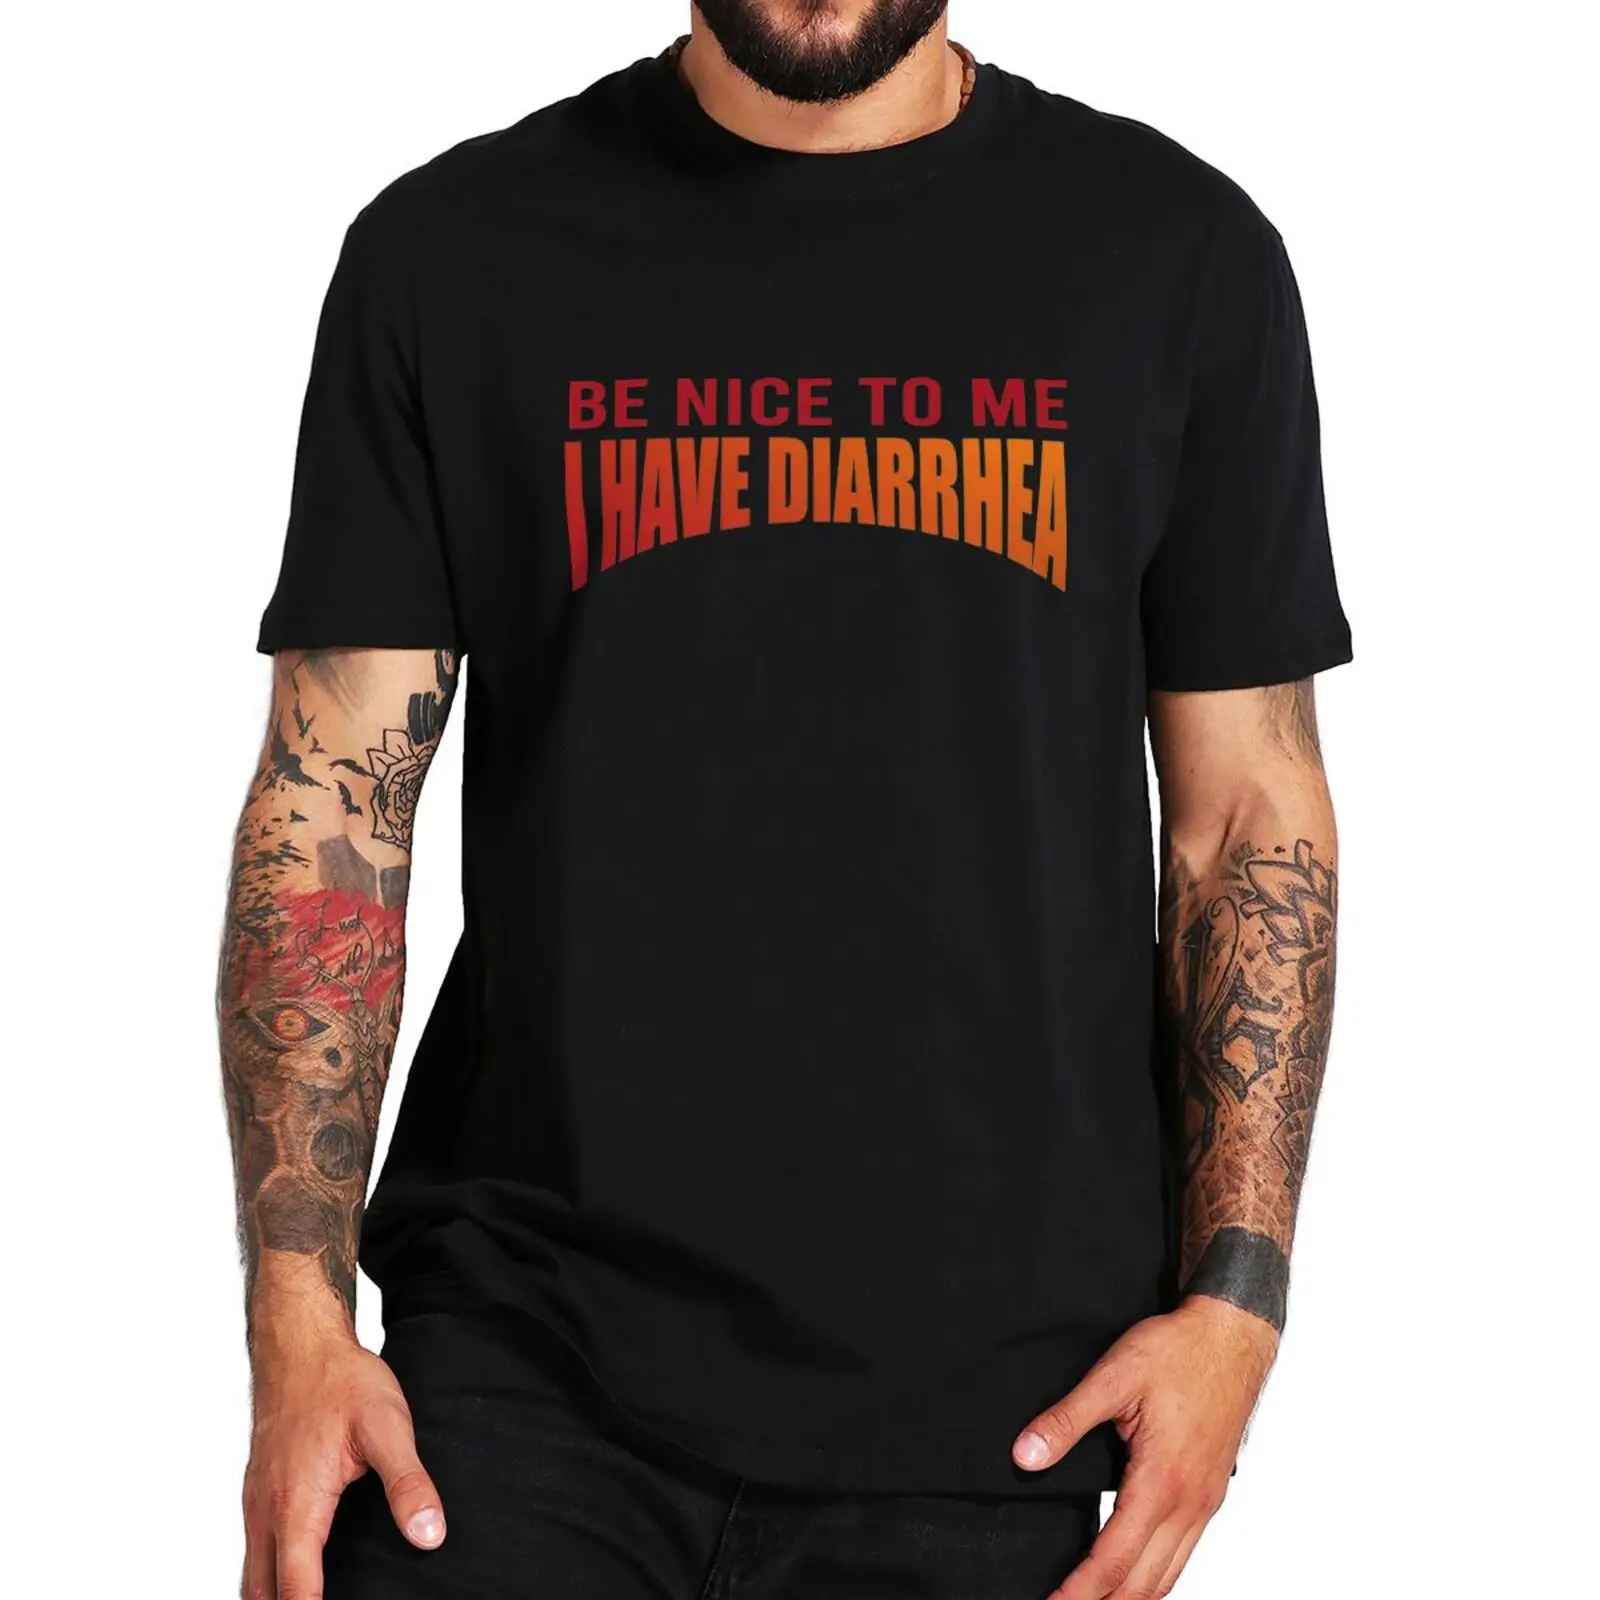 

Be Nice To Me I Have Diarrhea T Shirt Funny Meme Humor JokesTee Tops EU Size 100% Cotton Unisex Casual Soft Tshirts